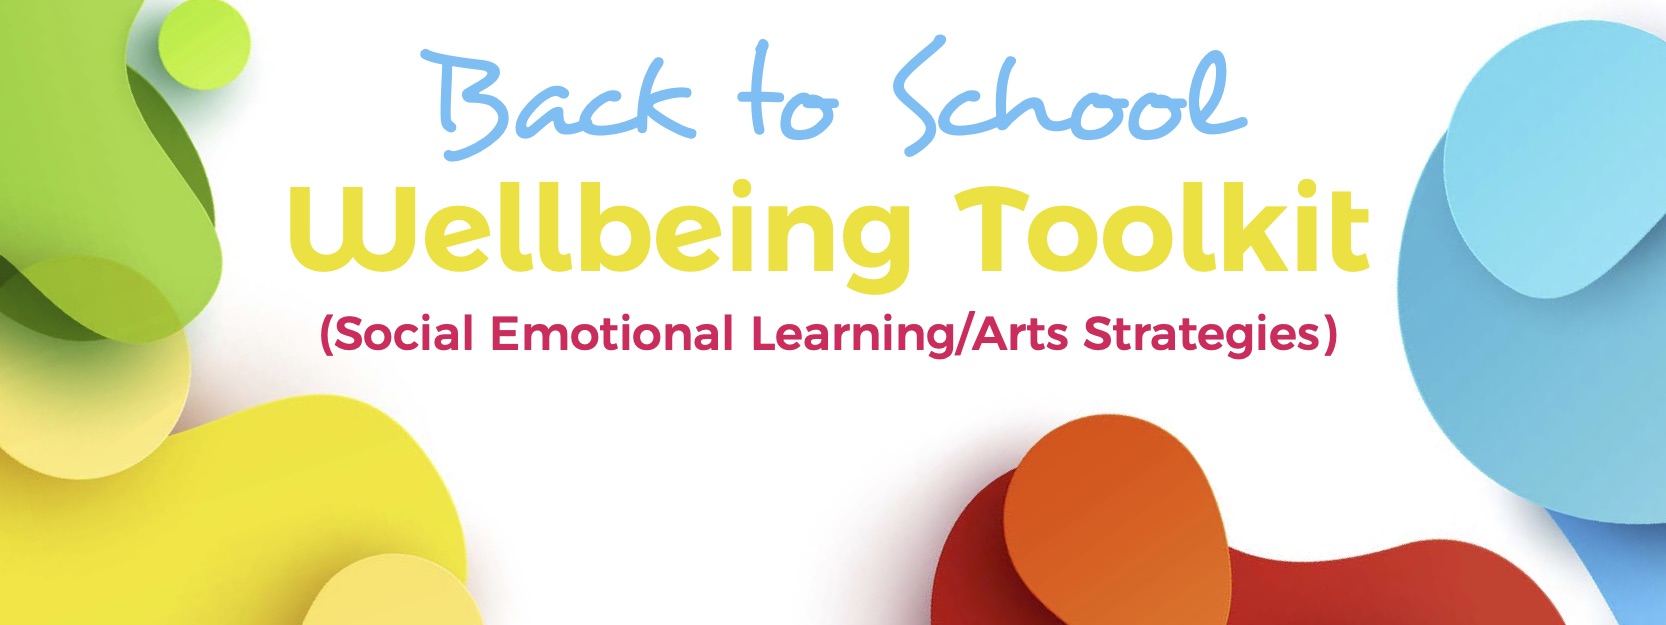 VAPA Back To School Wellbeing Toolkit Banner